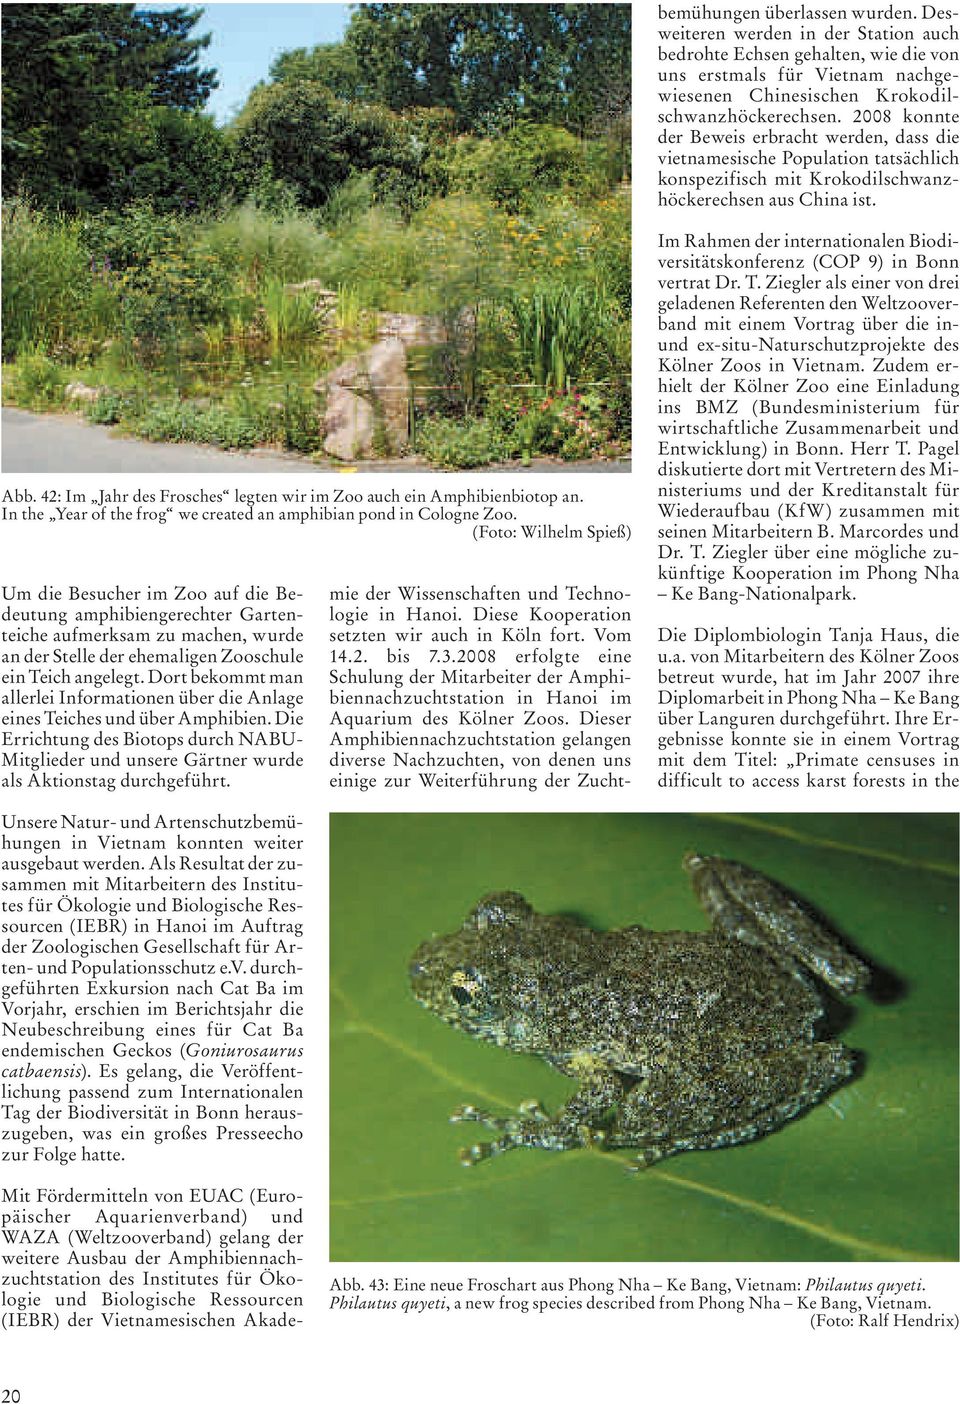 42: Im Jahr des Frosches legten wir im Zoo auch ein Amphibienbiotop an. In the Year of the frog we created an amphibian pond in Cologne Zoo.